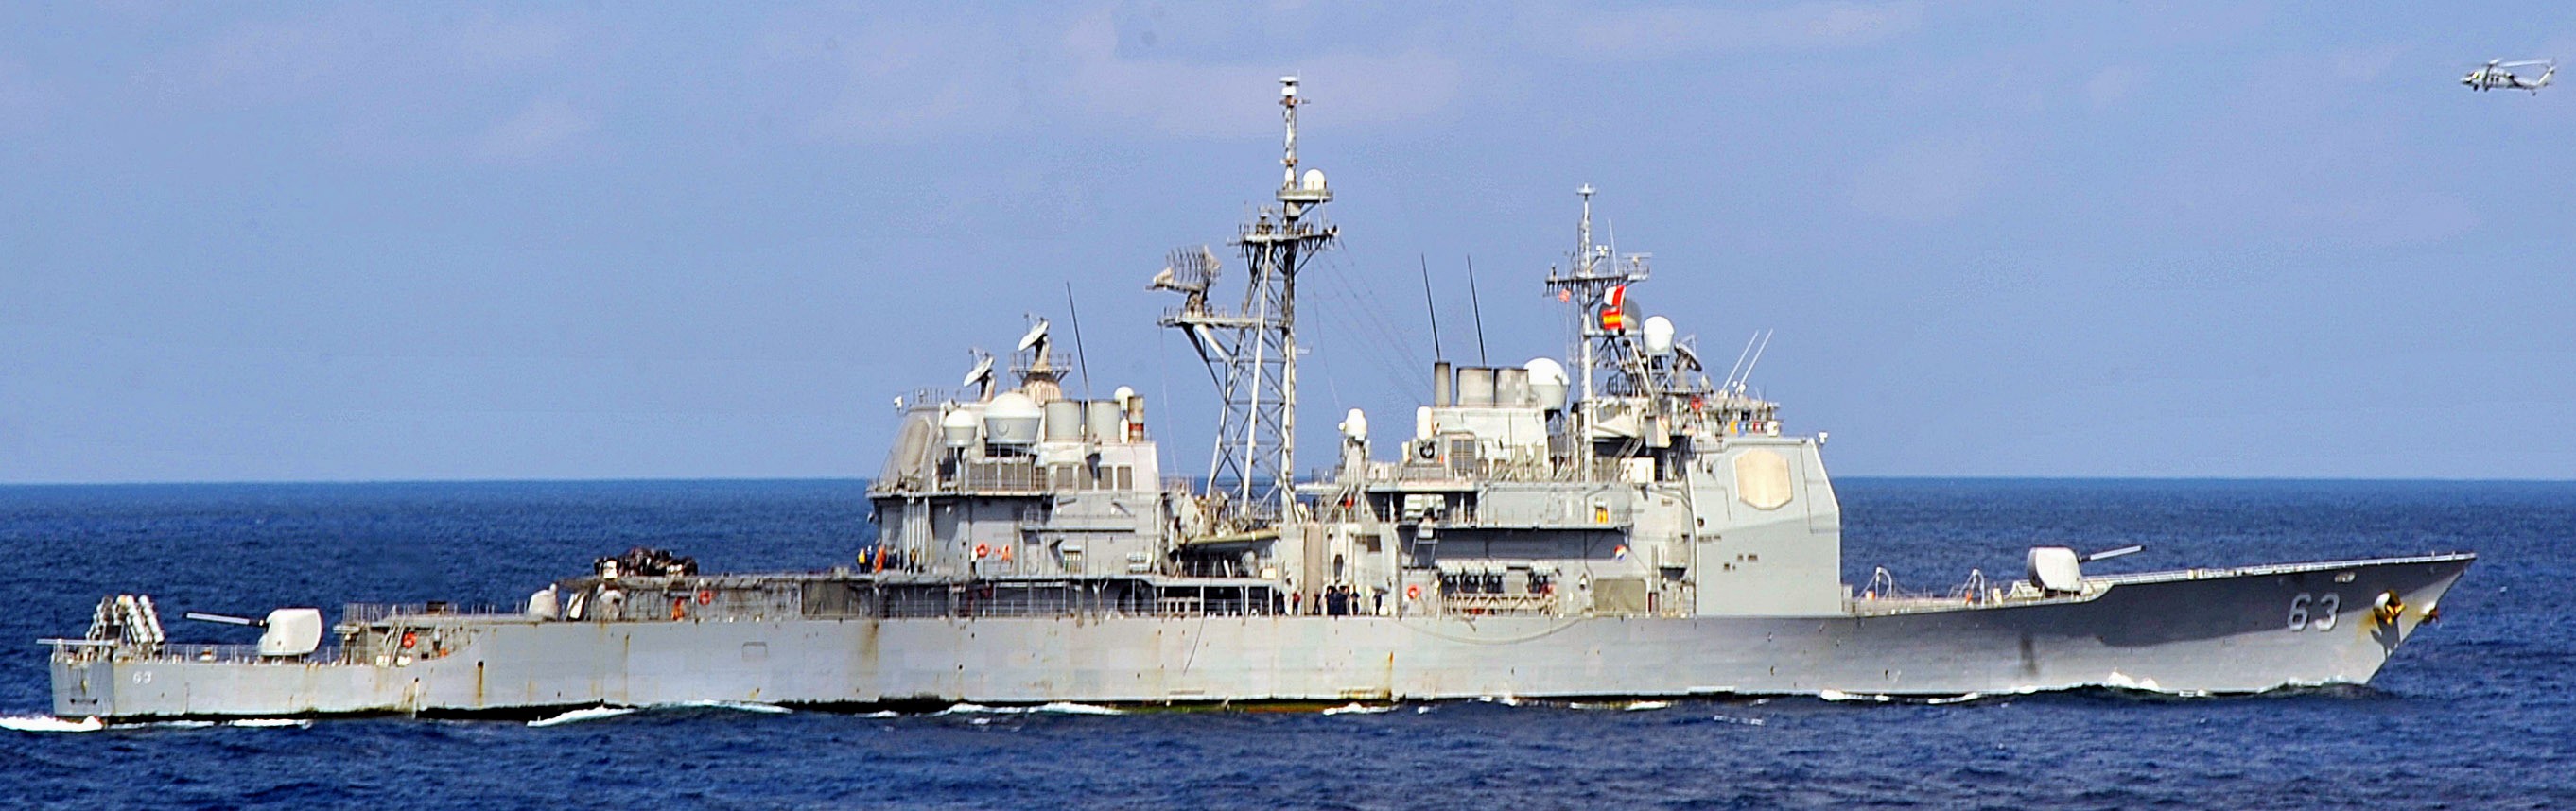 cg-63 uss cowpens ticonderoga class guided missile cruiser aegis us navy philippine sea 62